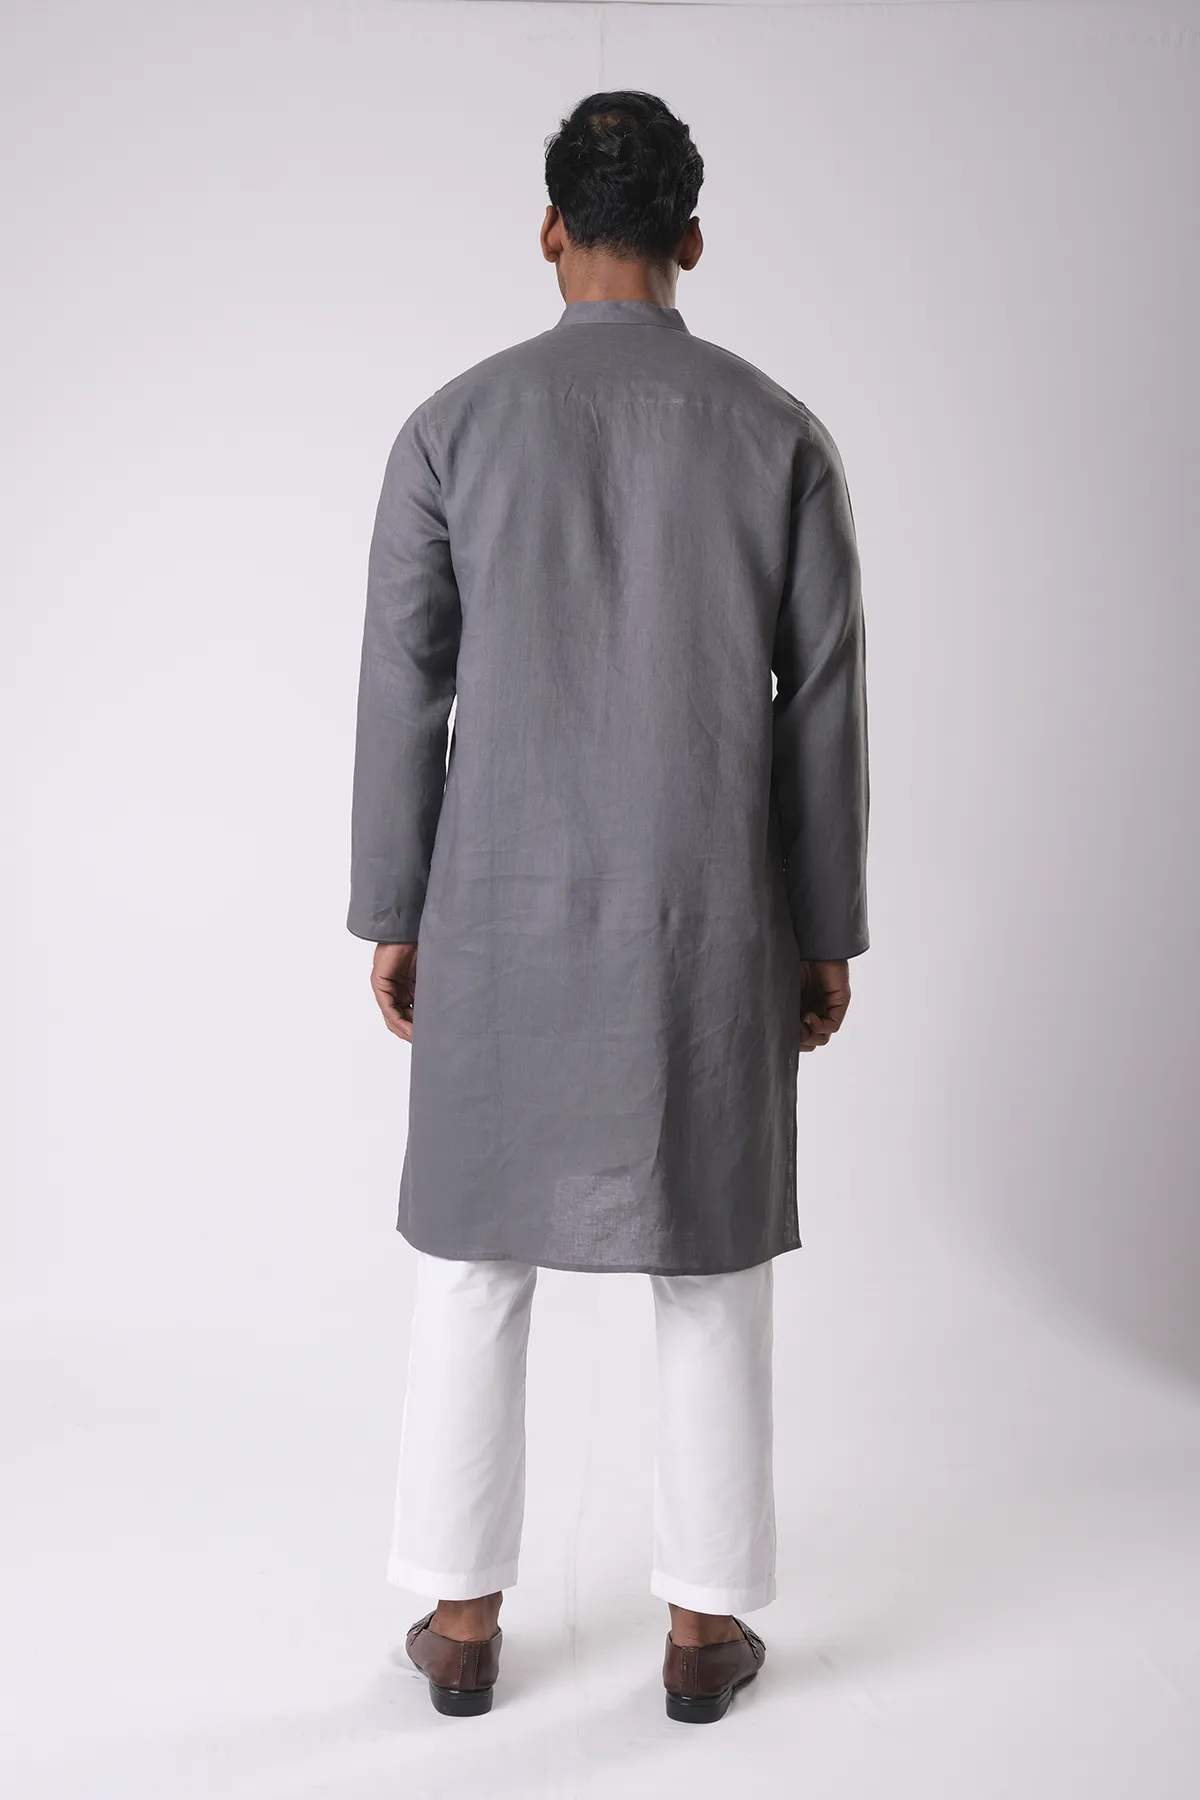 RR Men's Regular Fit Panjabi - Charcoal Grey